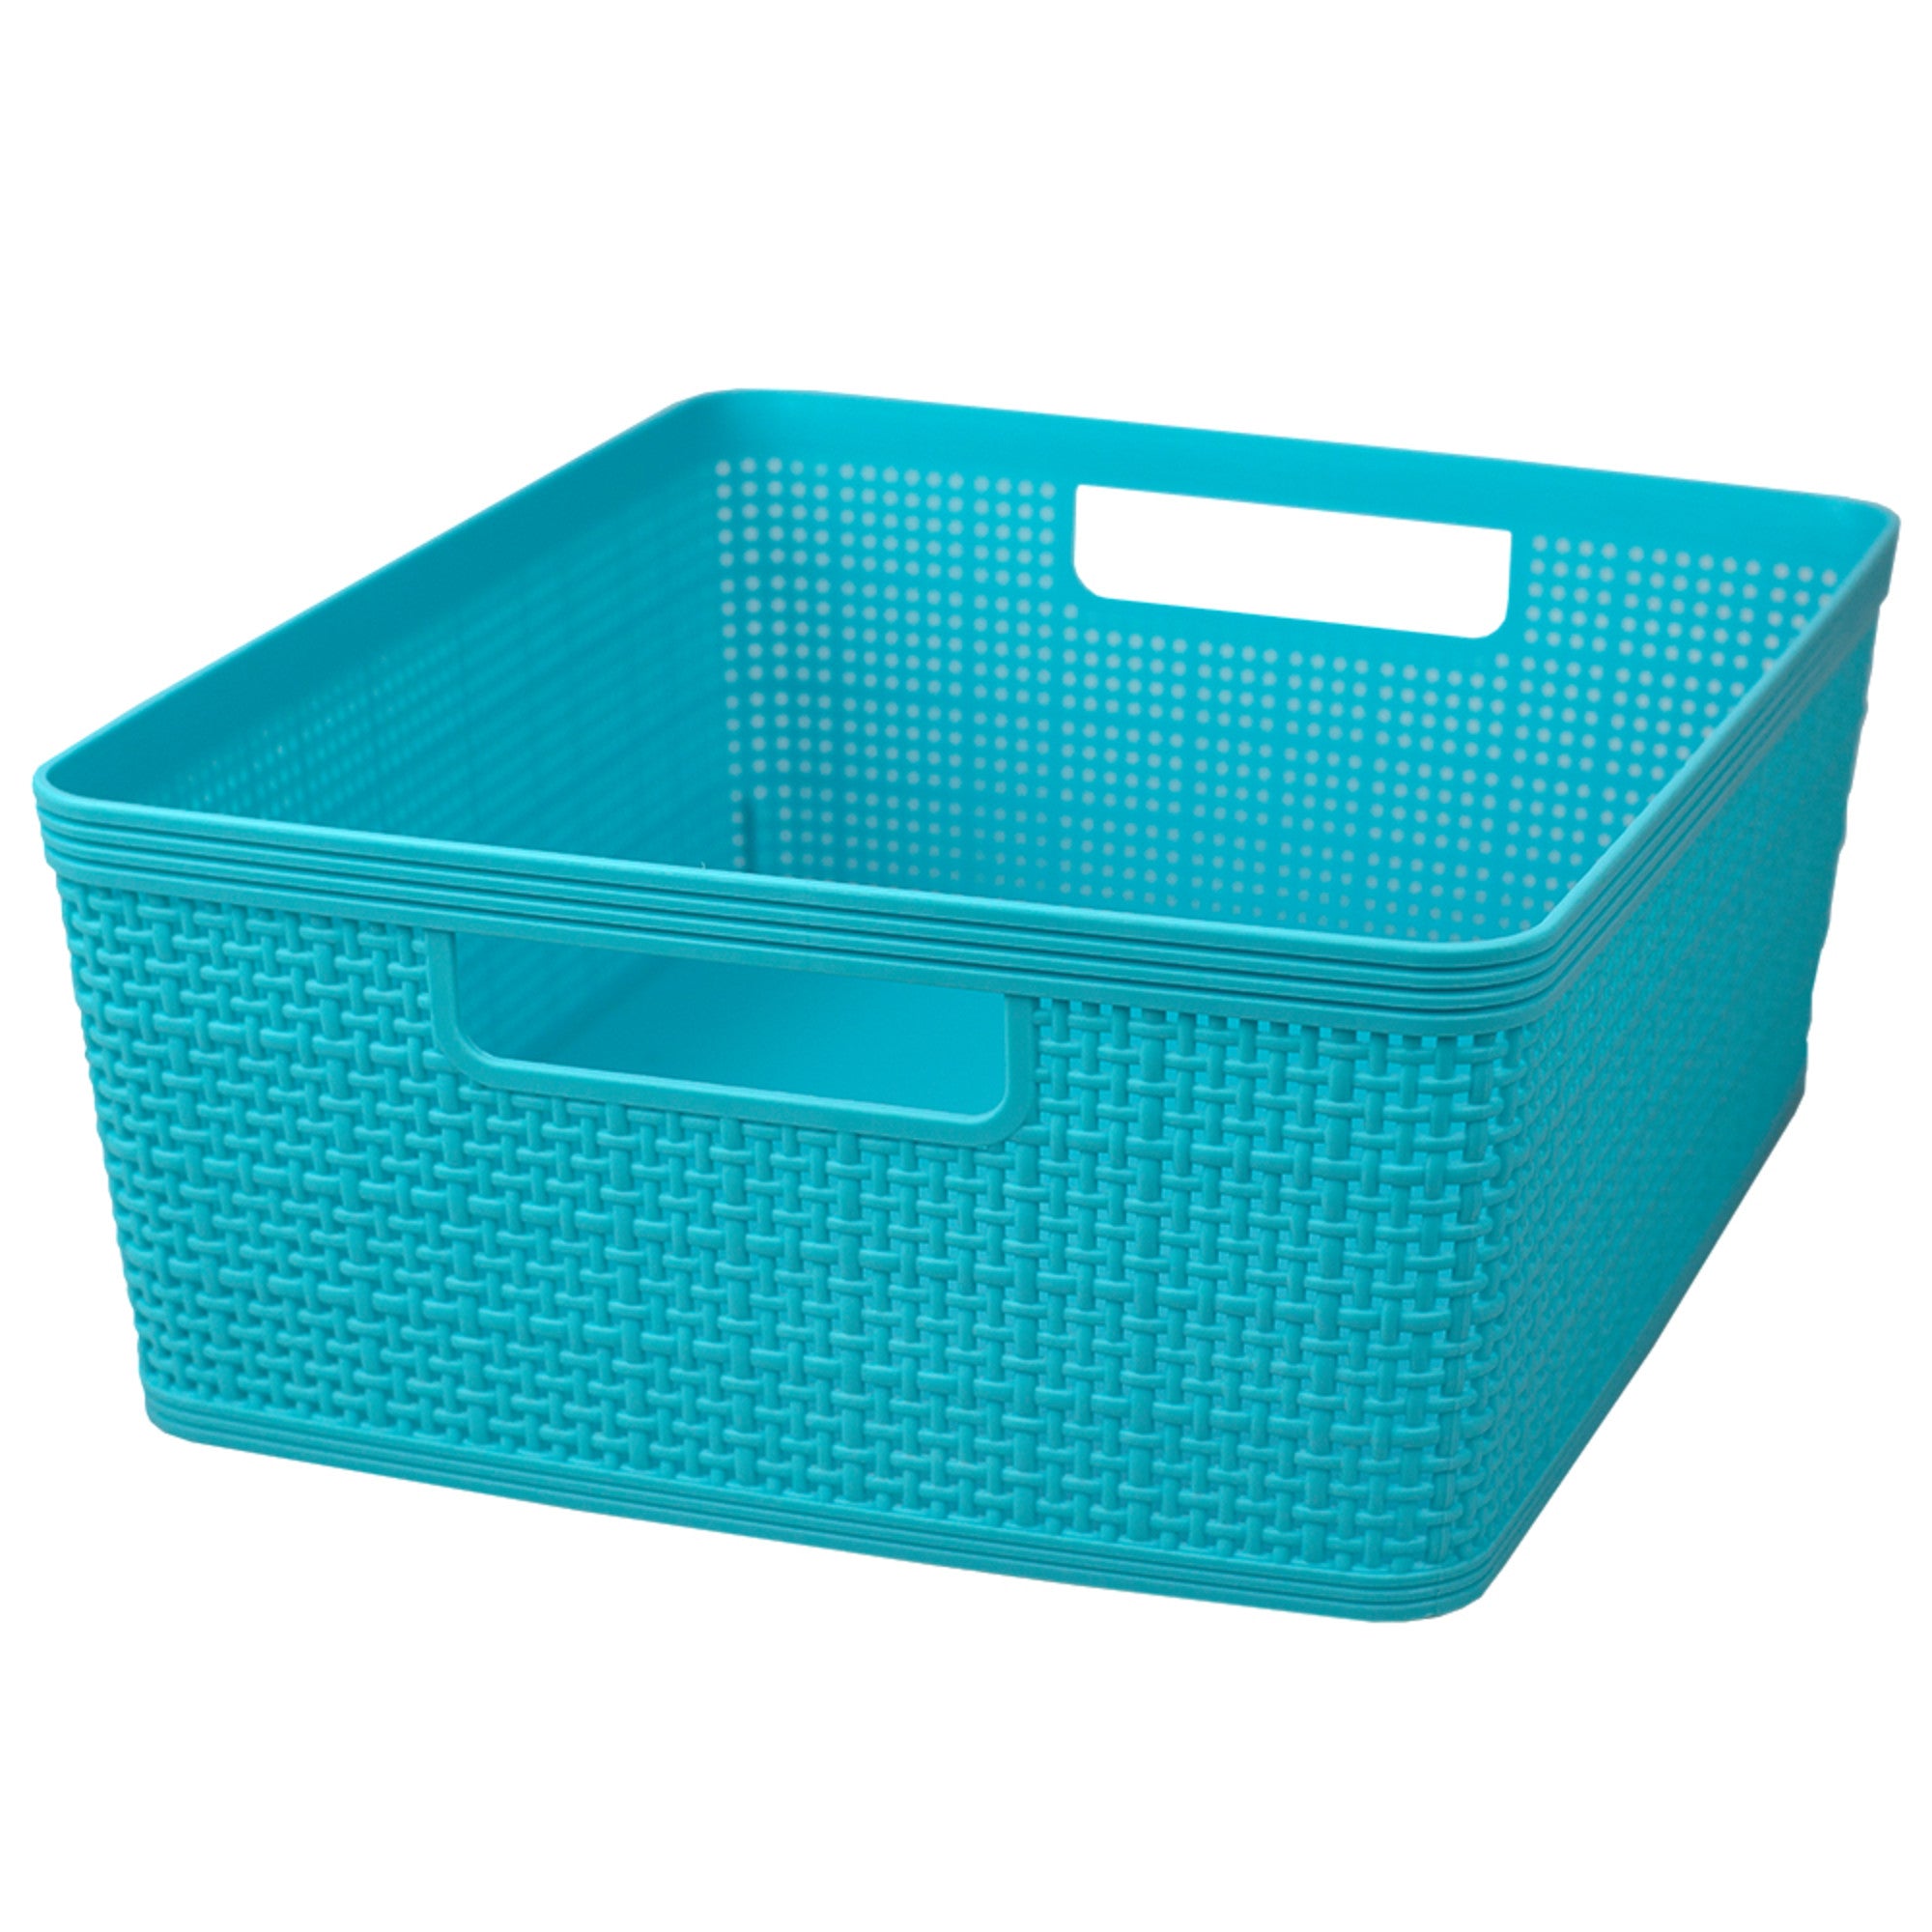 Home Basics Trellis Large Plastic Storage Basket with Cut-Out Handles - Assorted Colors